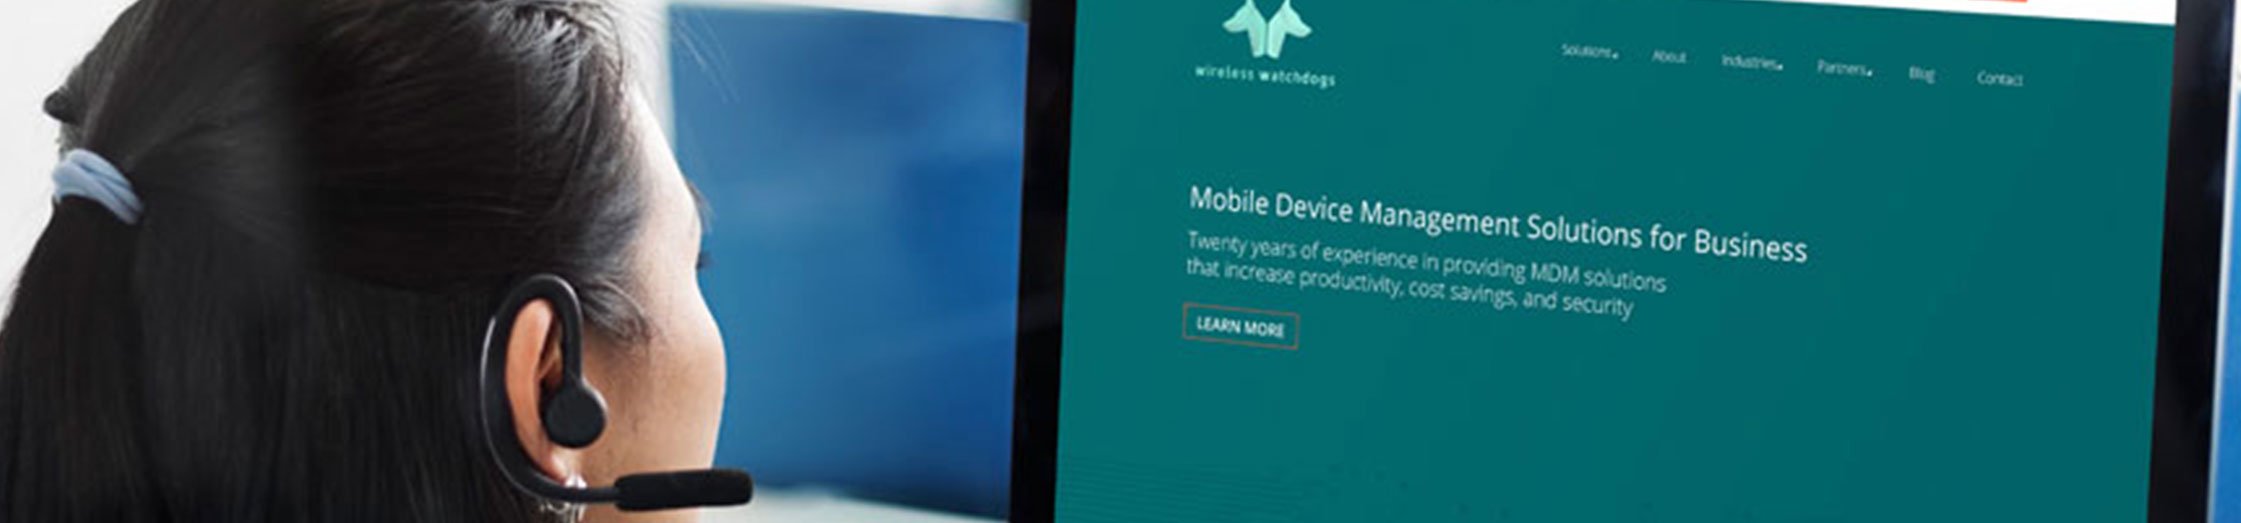 ThreeTwelve Wireless Watchdogs Mobility Management Marketing